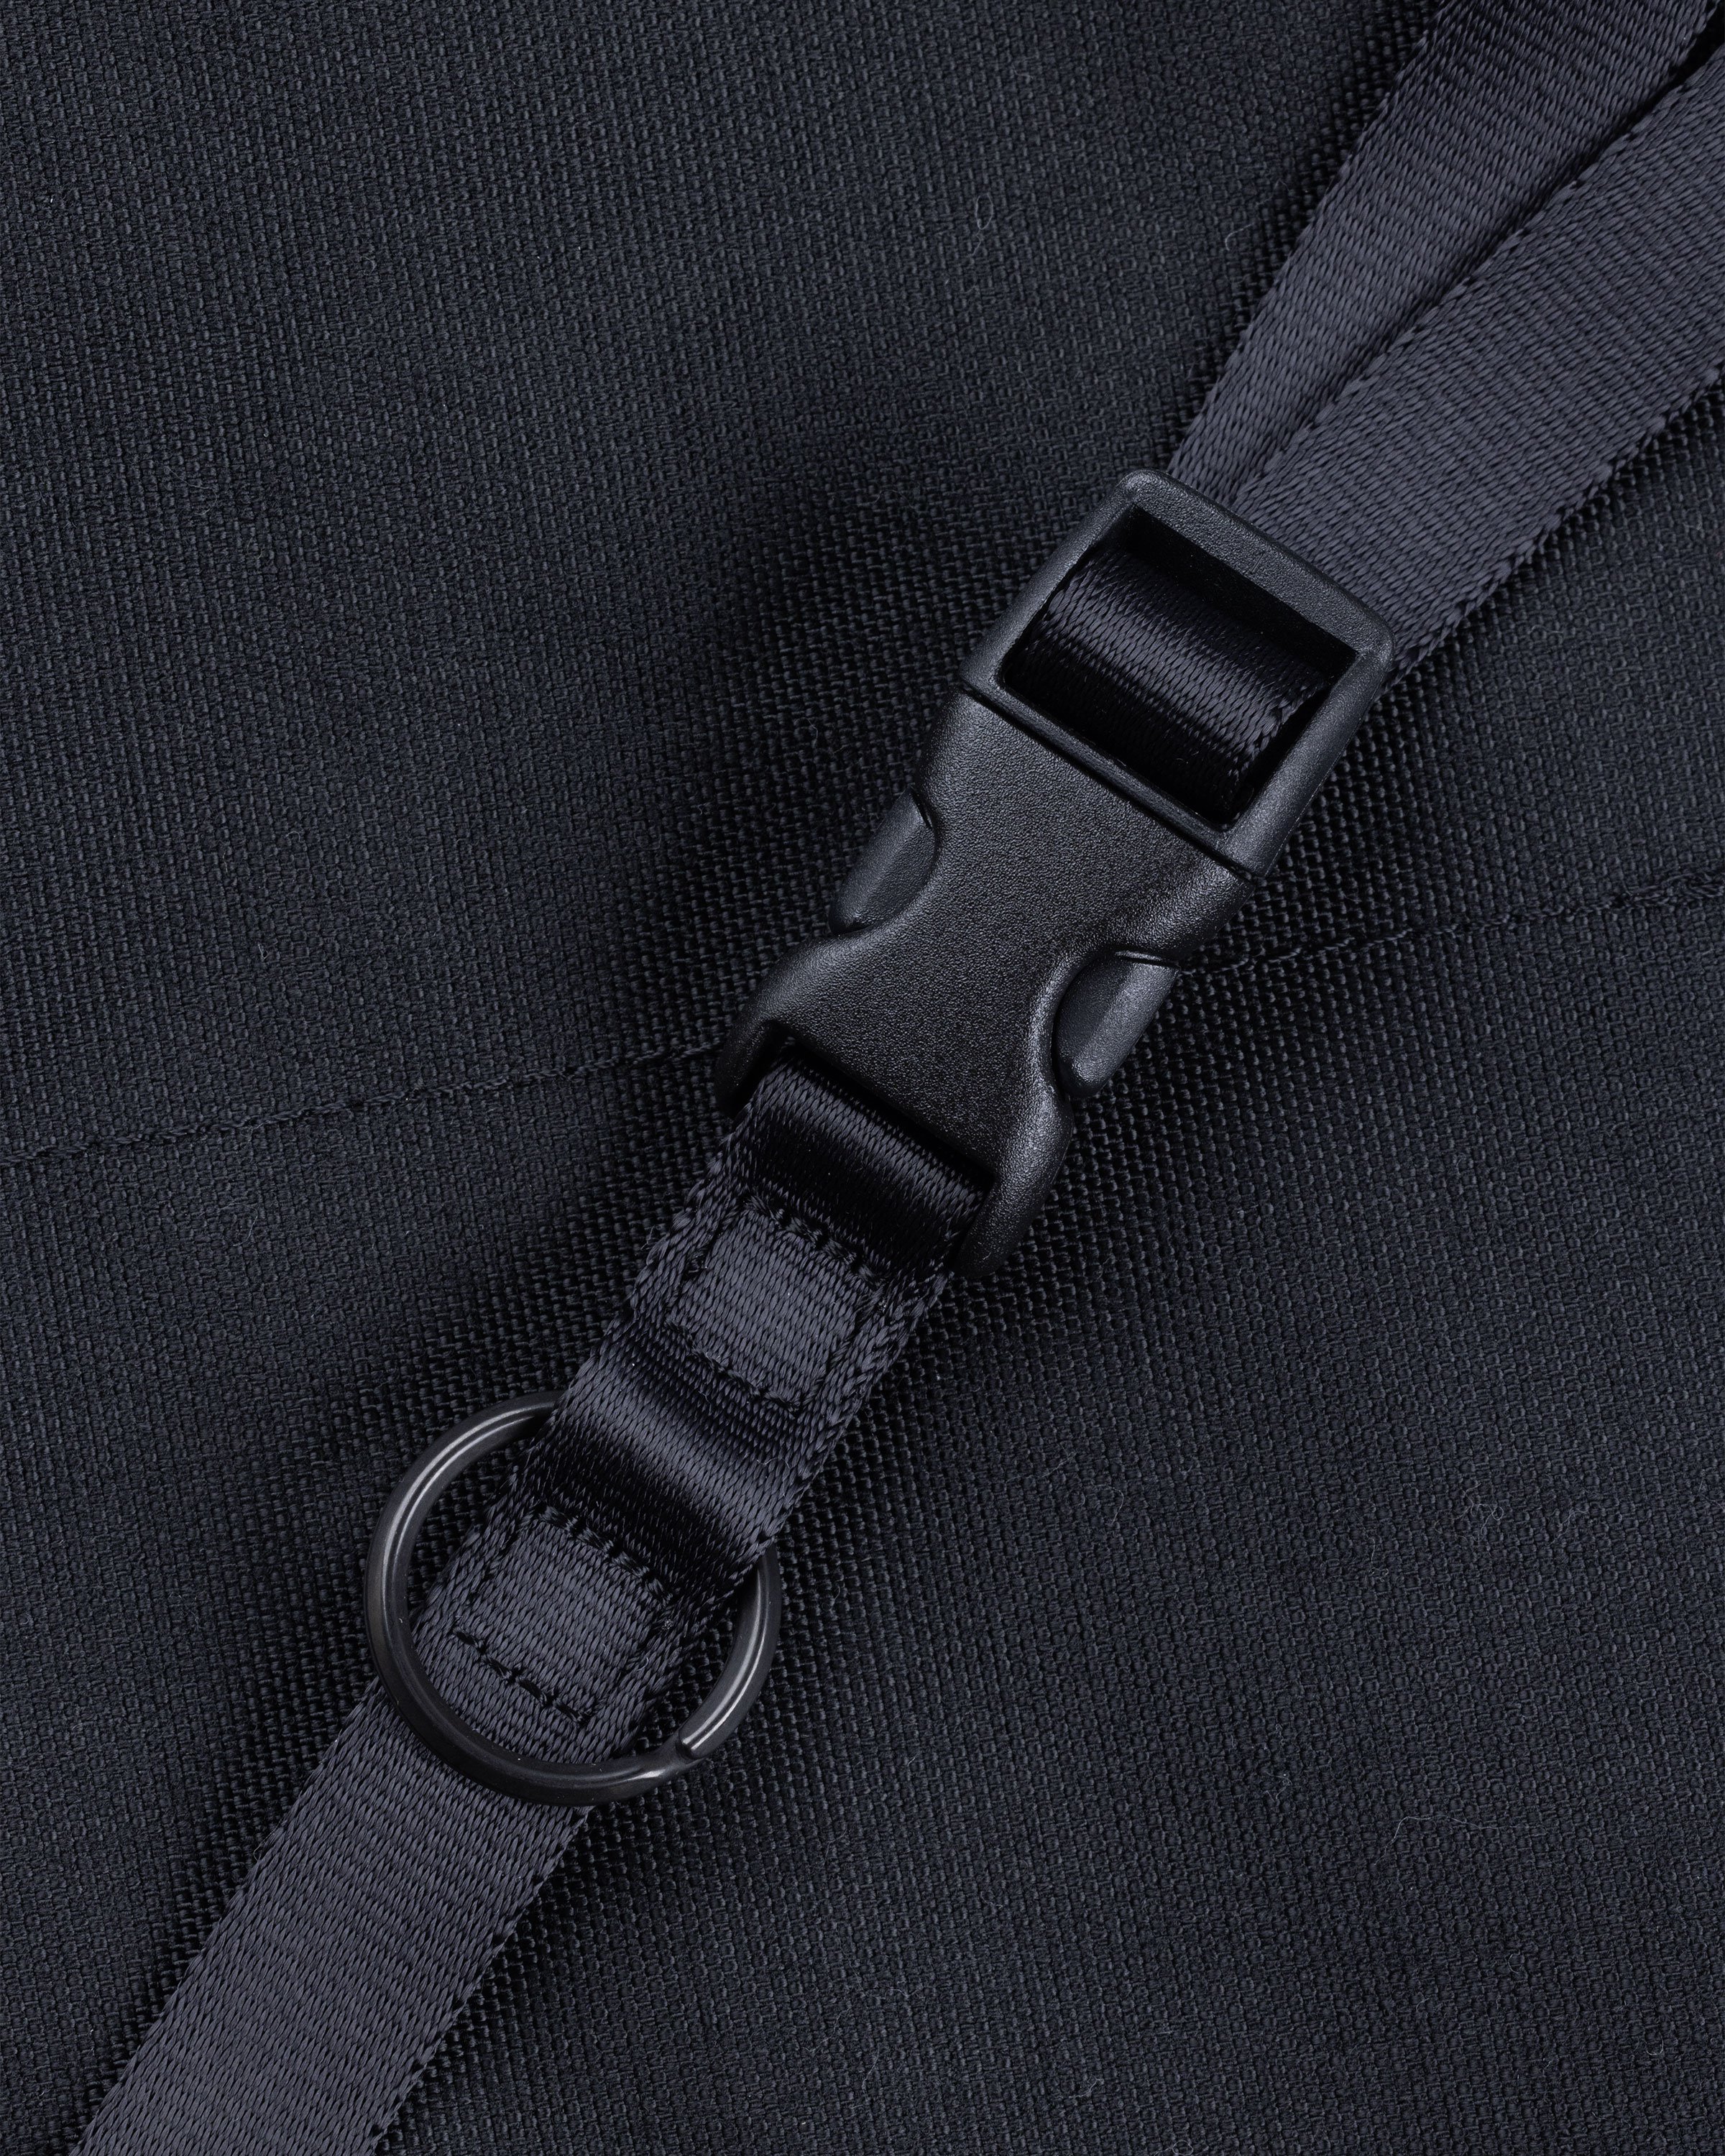 Porter-Yoshida & Co. - Sacoche Hybrid Shoulder Bag Black - Accessories - Black - Image 6